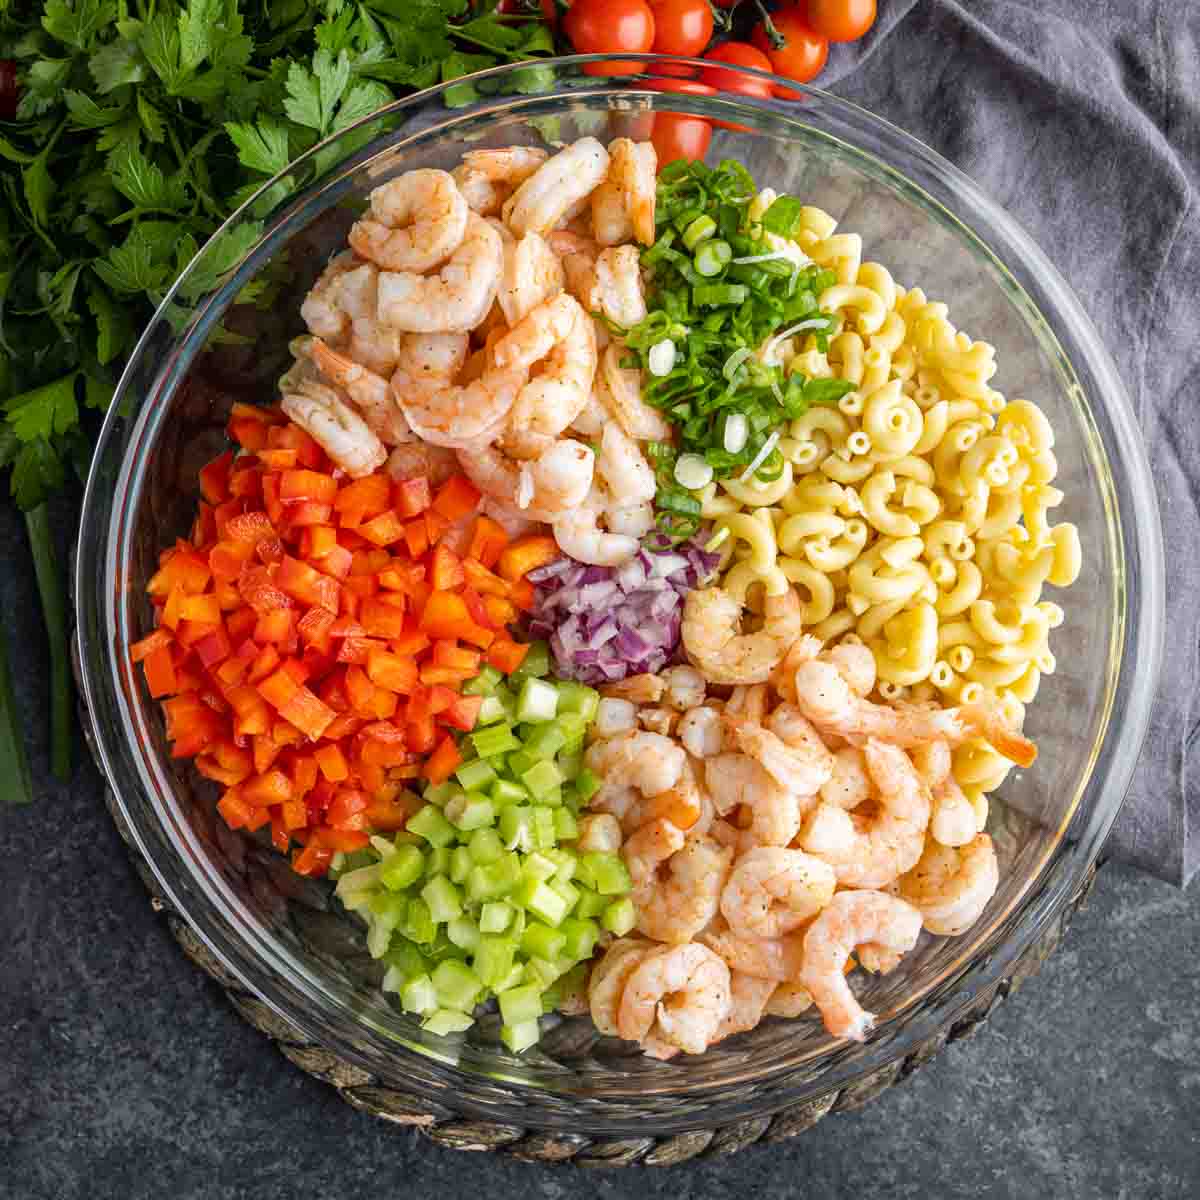 Shrimp Pasta Salad ingrediets in a glass bowl